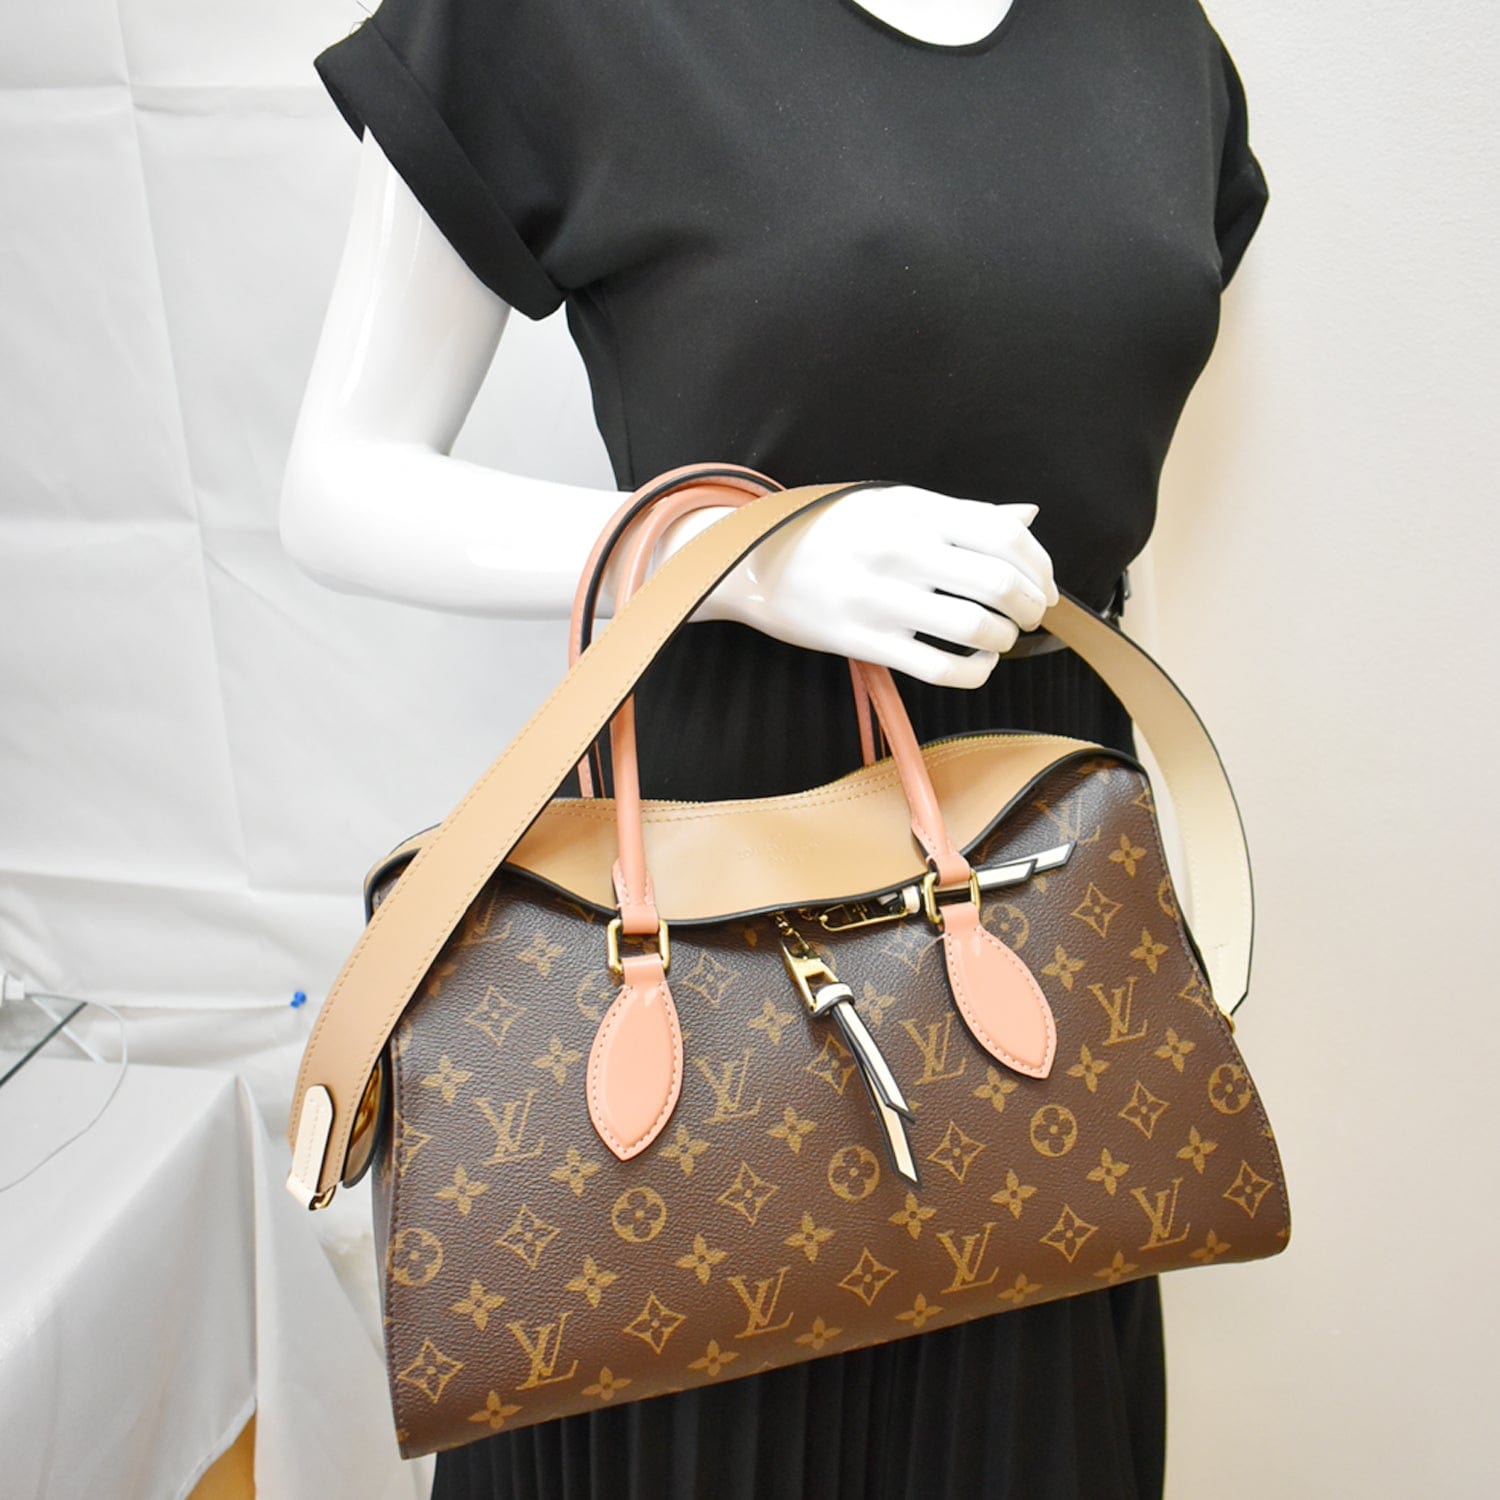 Louis Vuitton Tuileries Handbag